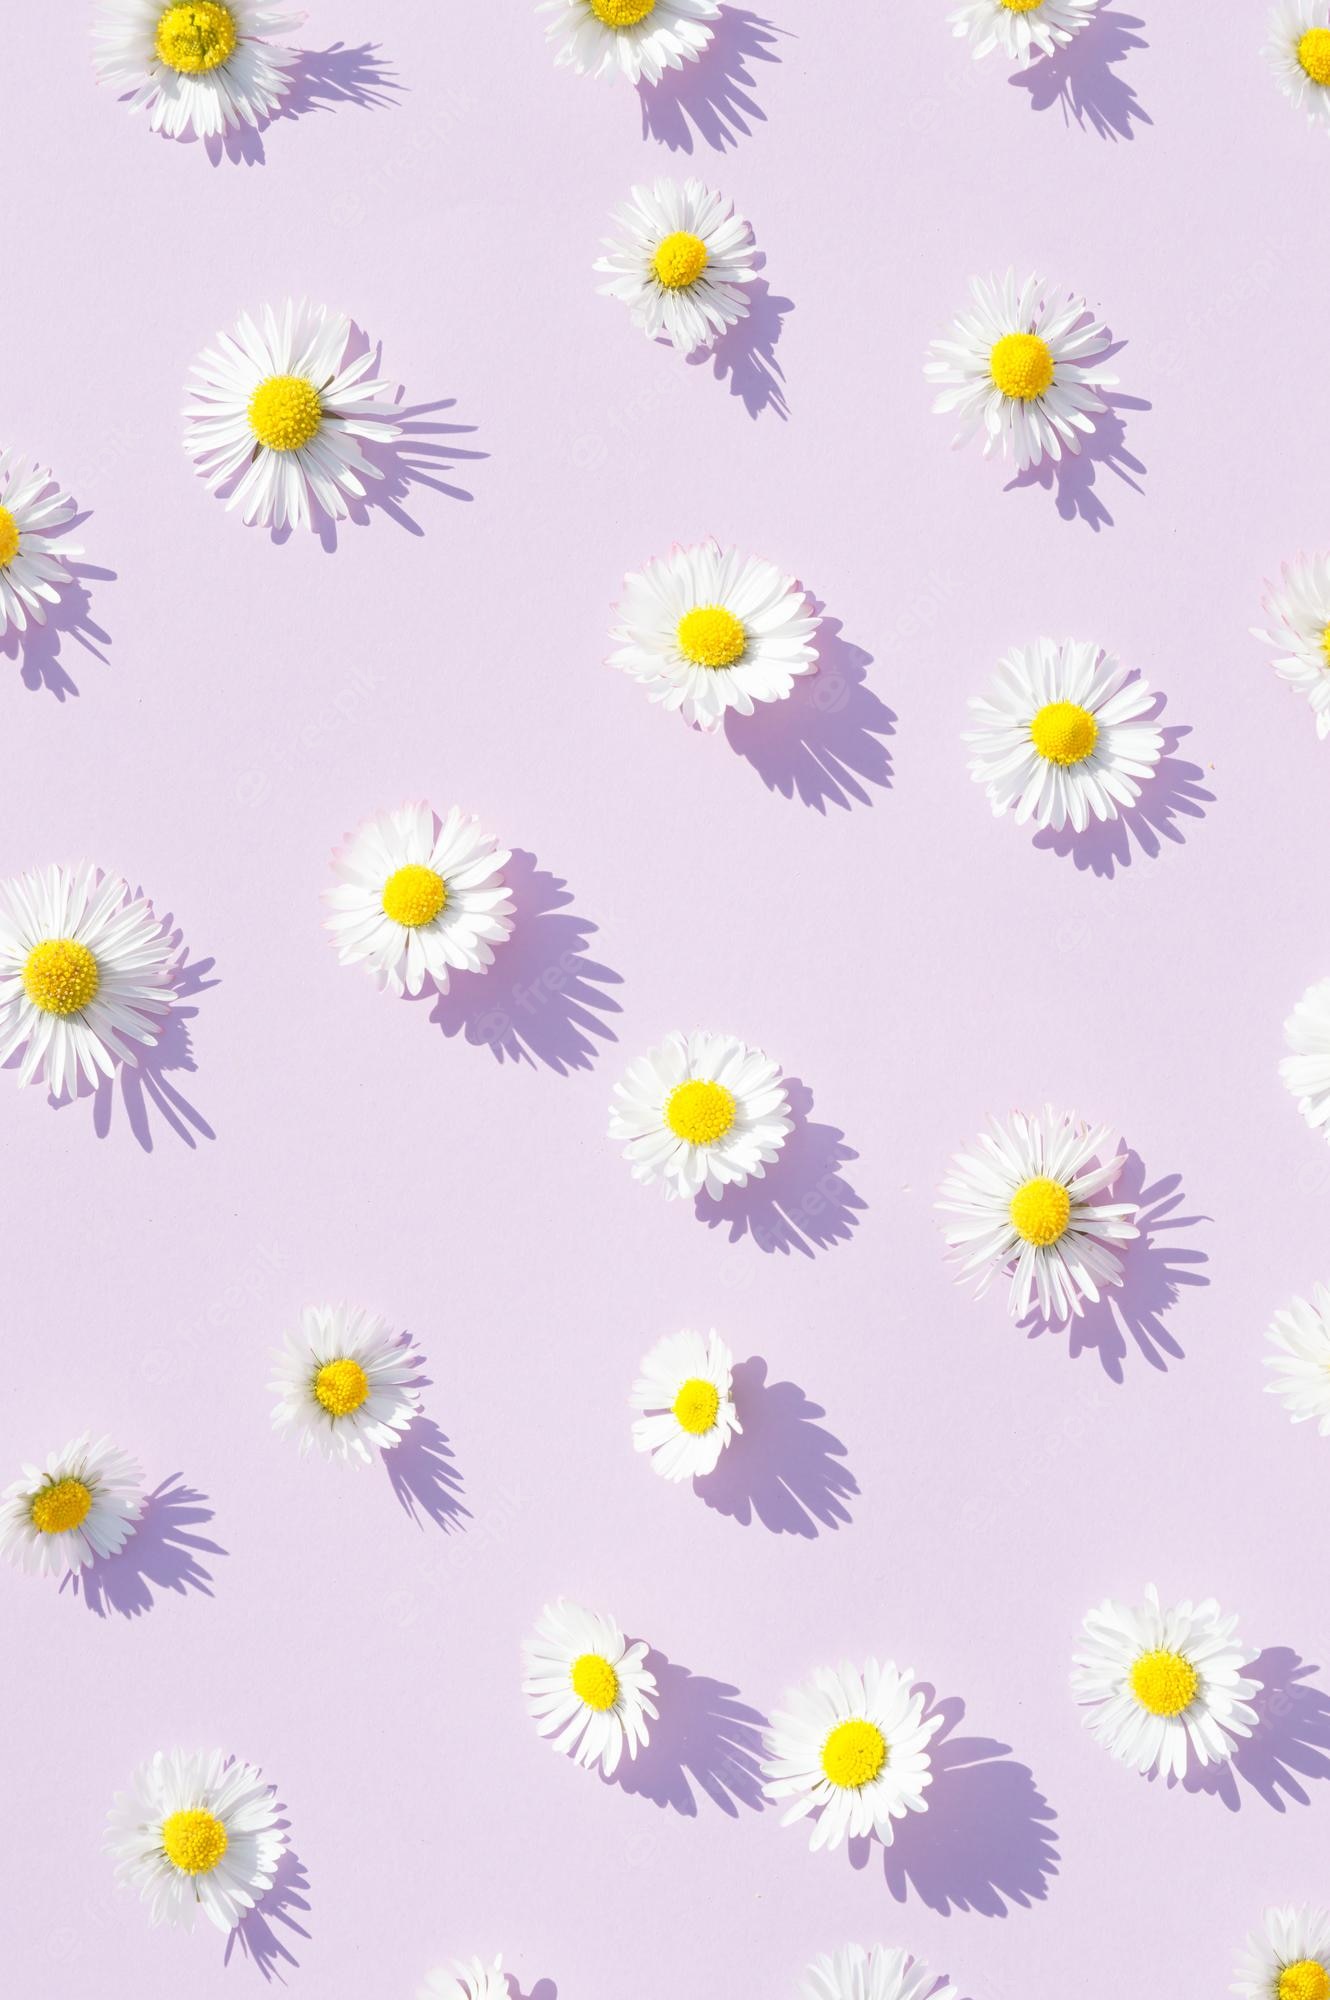 Premium Photo. Spring daisy flower on a purple background minimal aesthetic summer flower concept